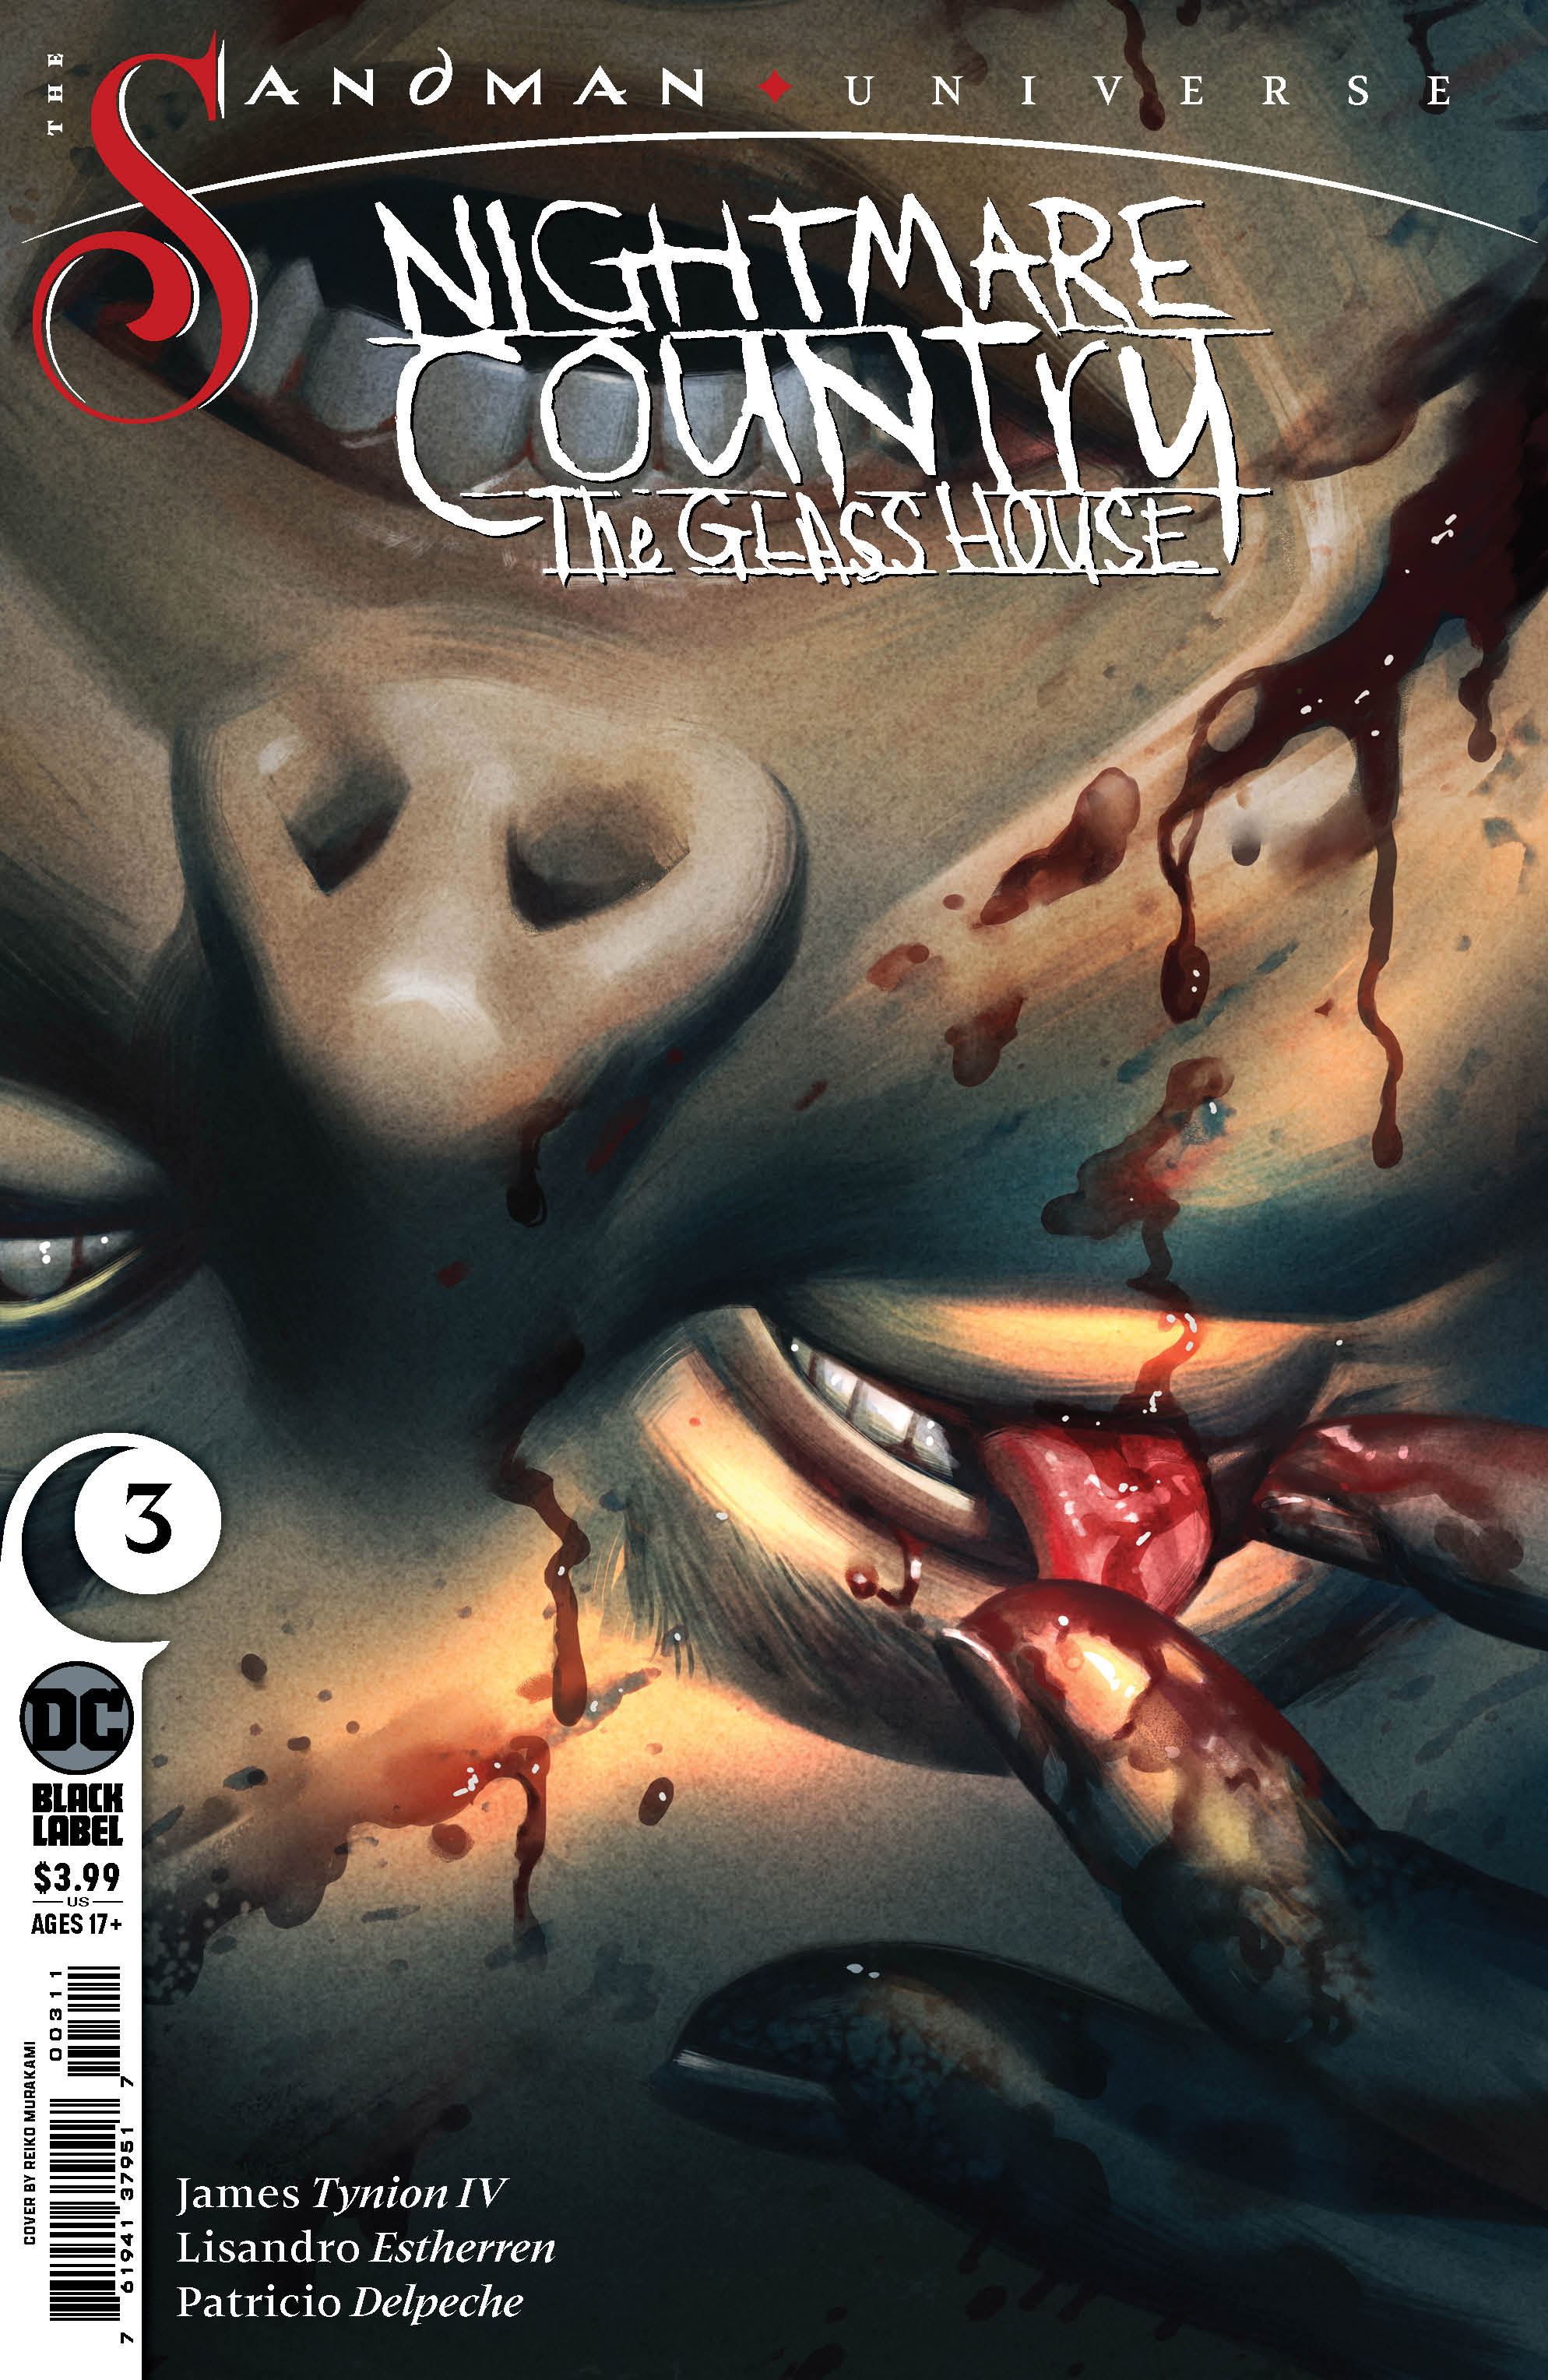 Sandman Universe Nightmare Country The Glass House #3 Cover A Reiko Murakami (Mature) (Of 6)